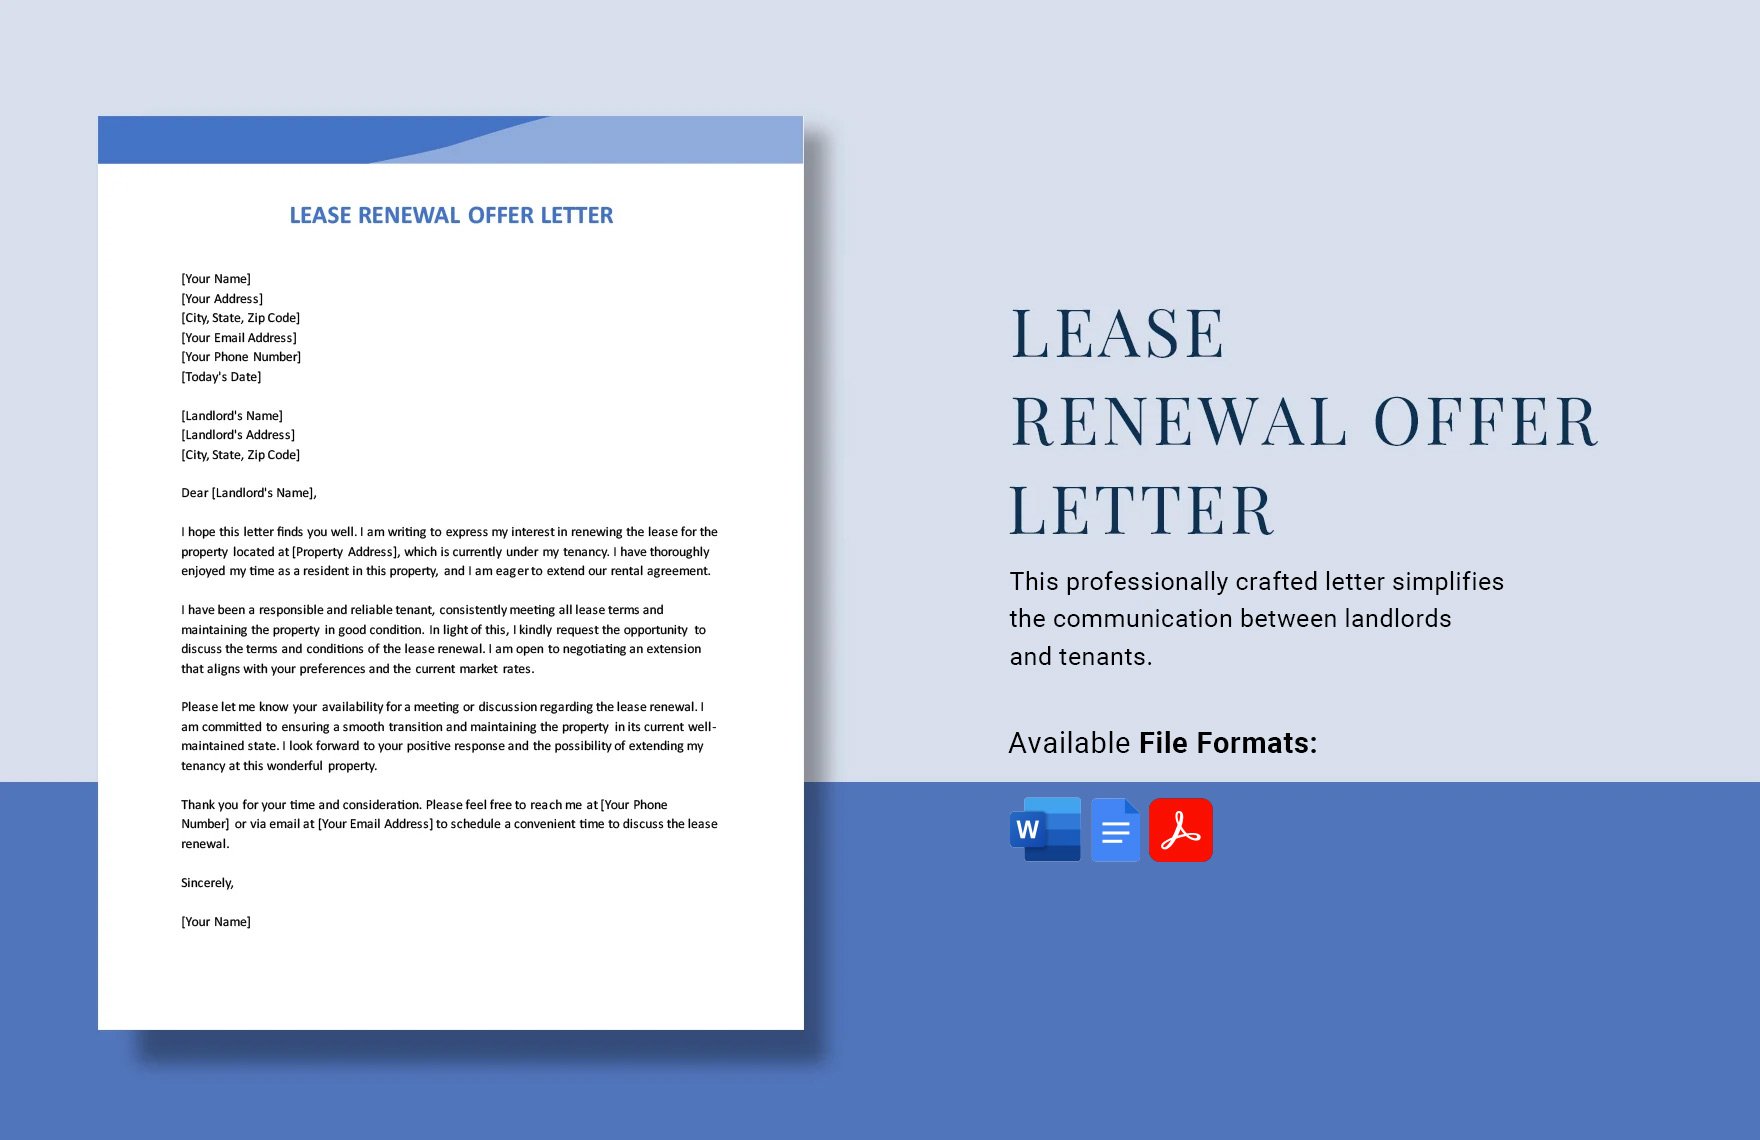 Lease Renewal Offer Letter in Word, Google Docs, PDF